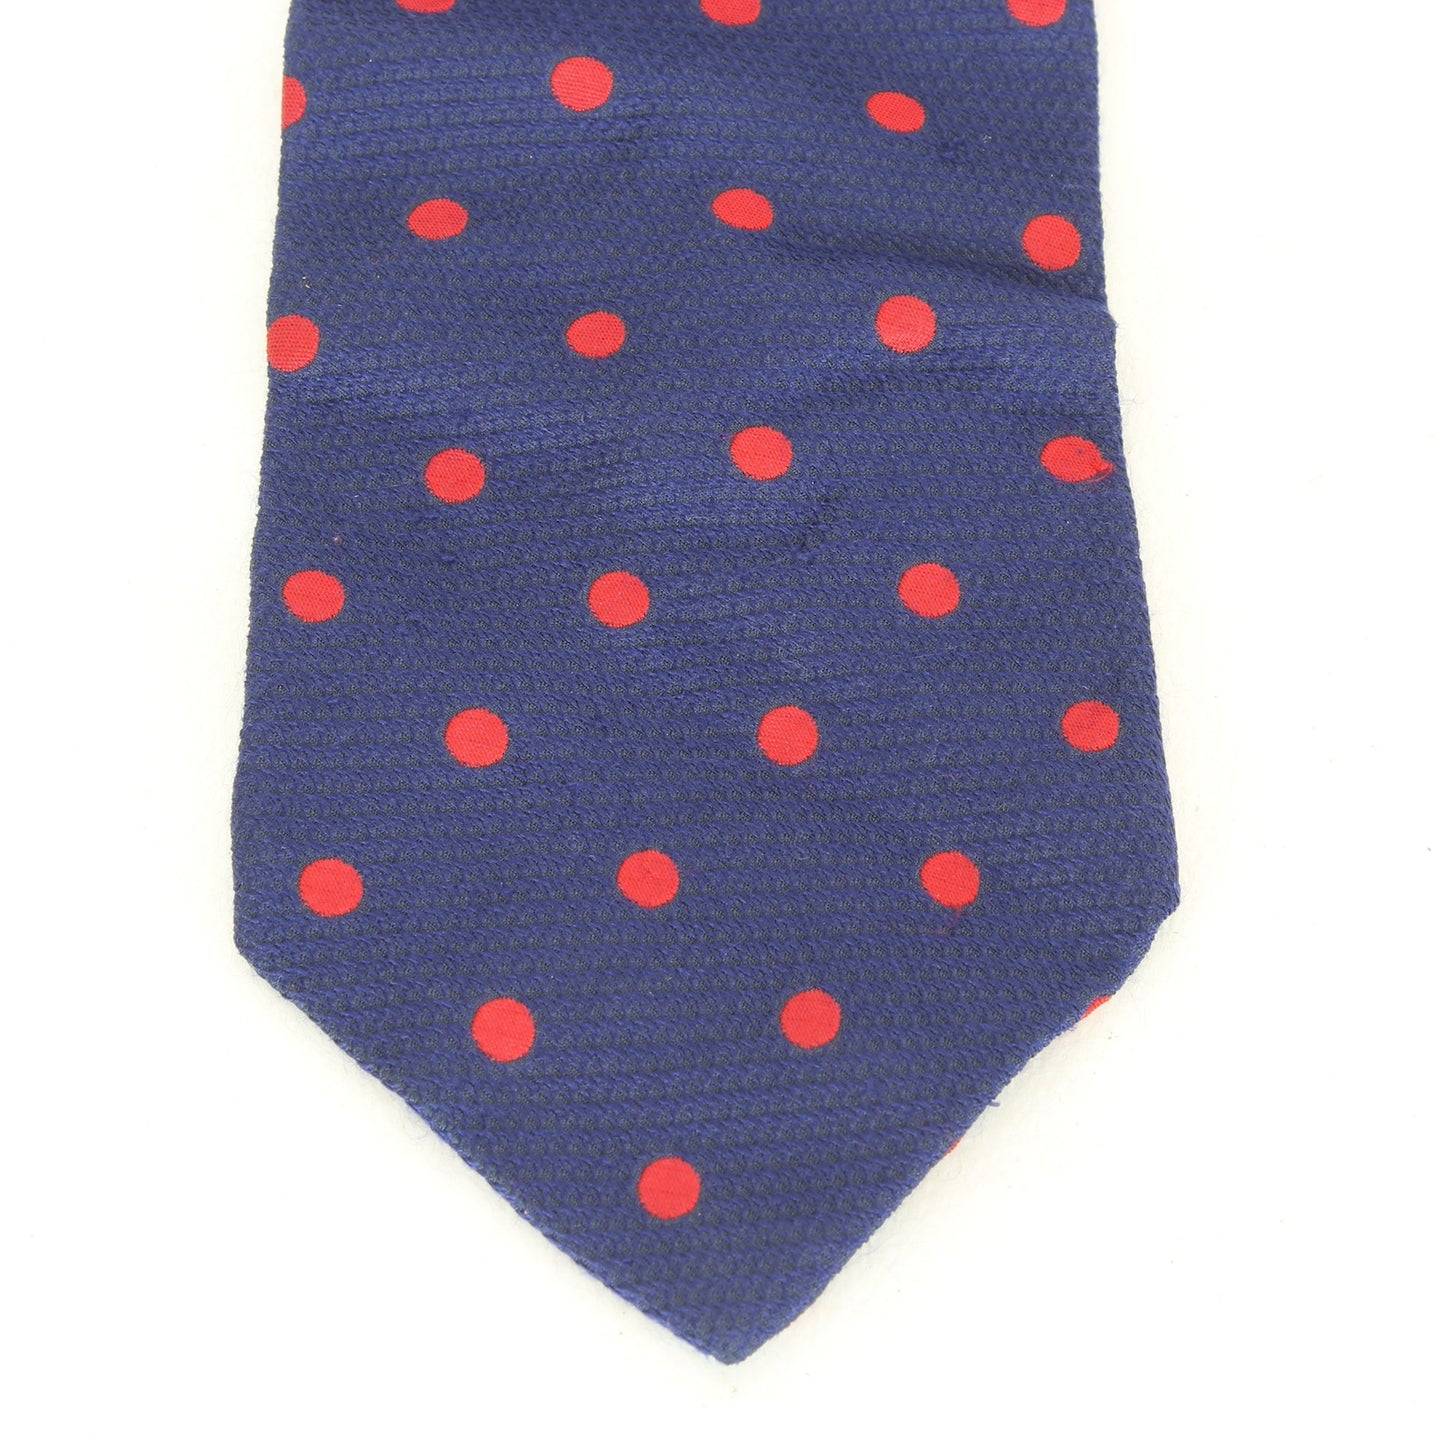 Trussardi Cravatta Seta Pois Blu Rossa Vintage Anni 90